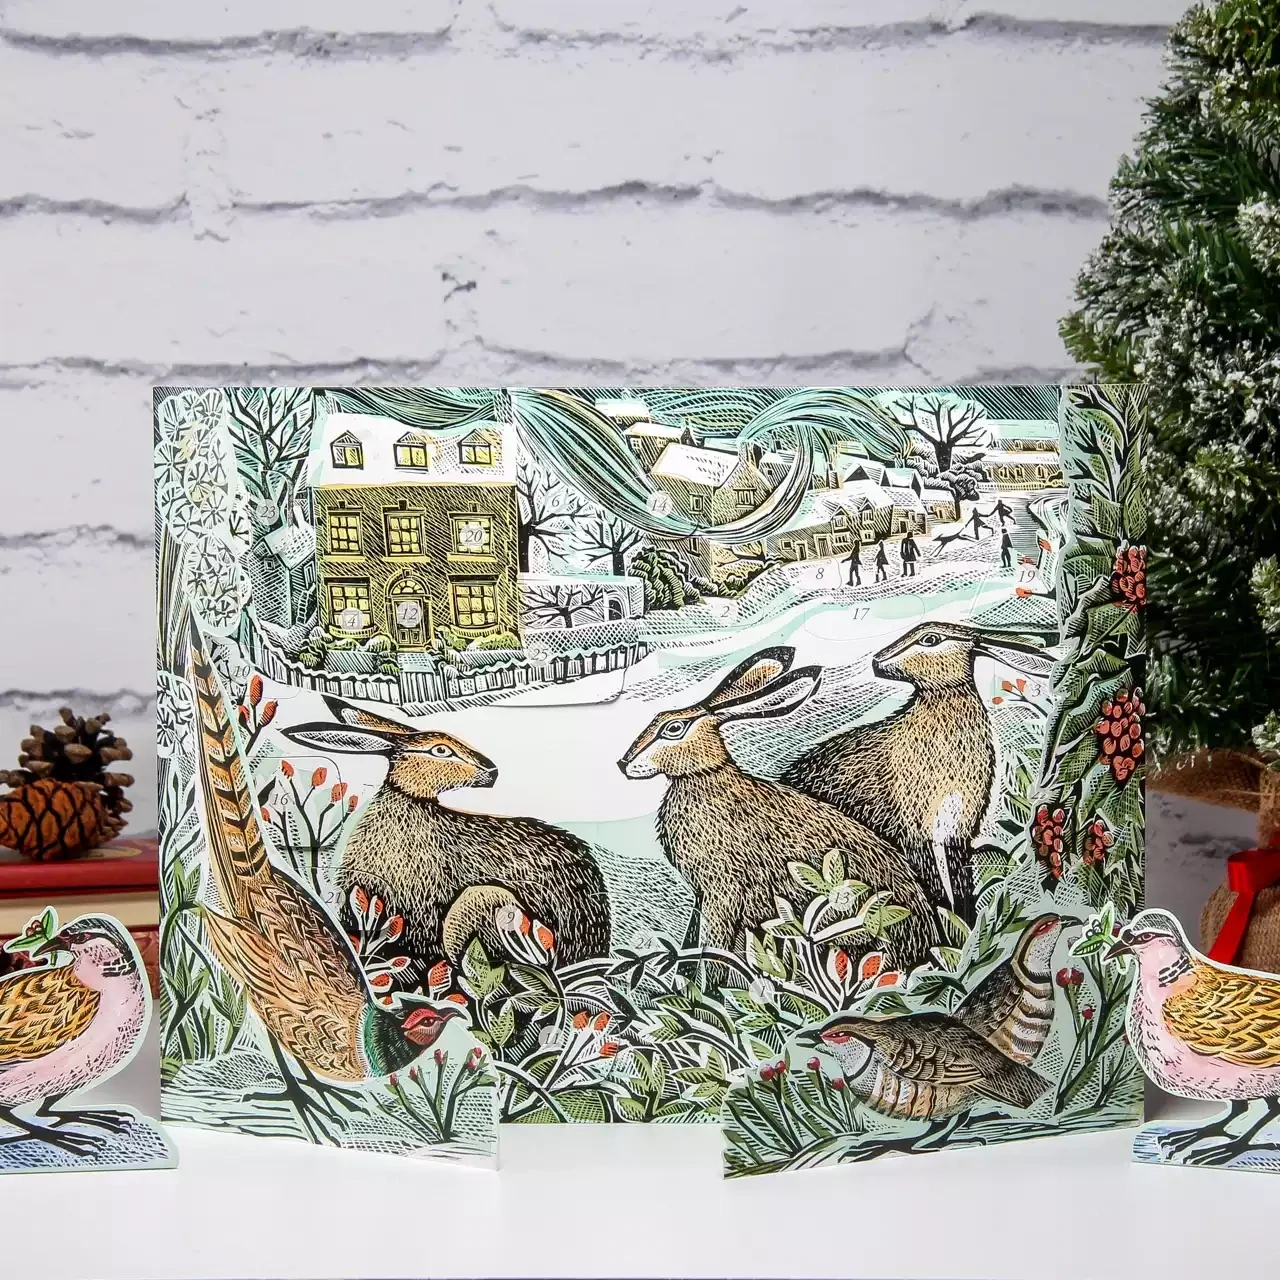 We Three Hares Advent Calendar by Angela Harding